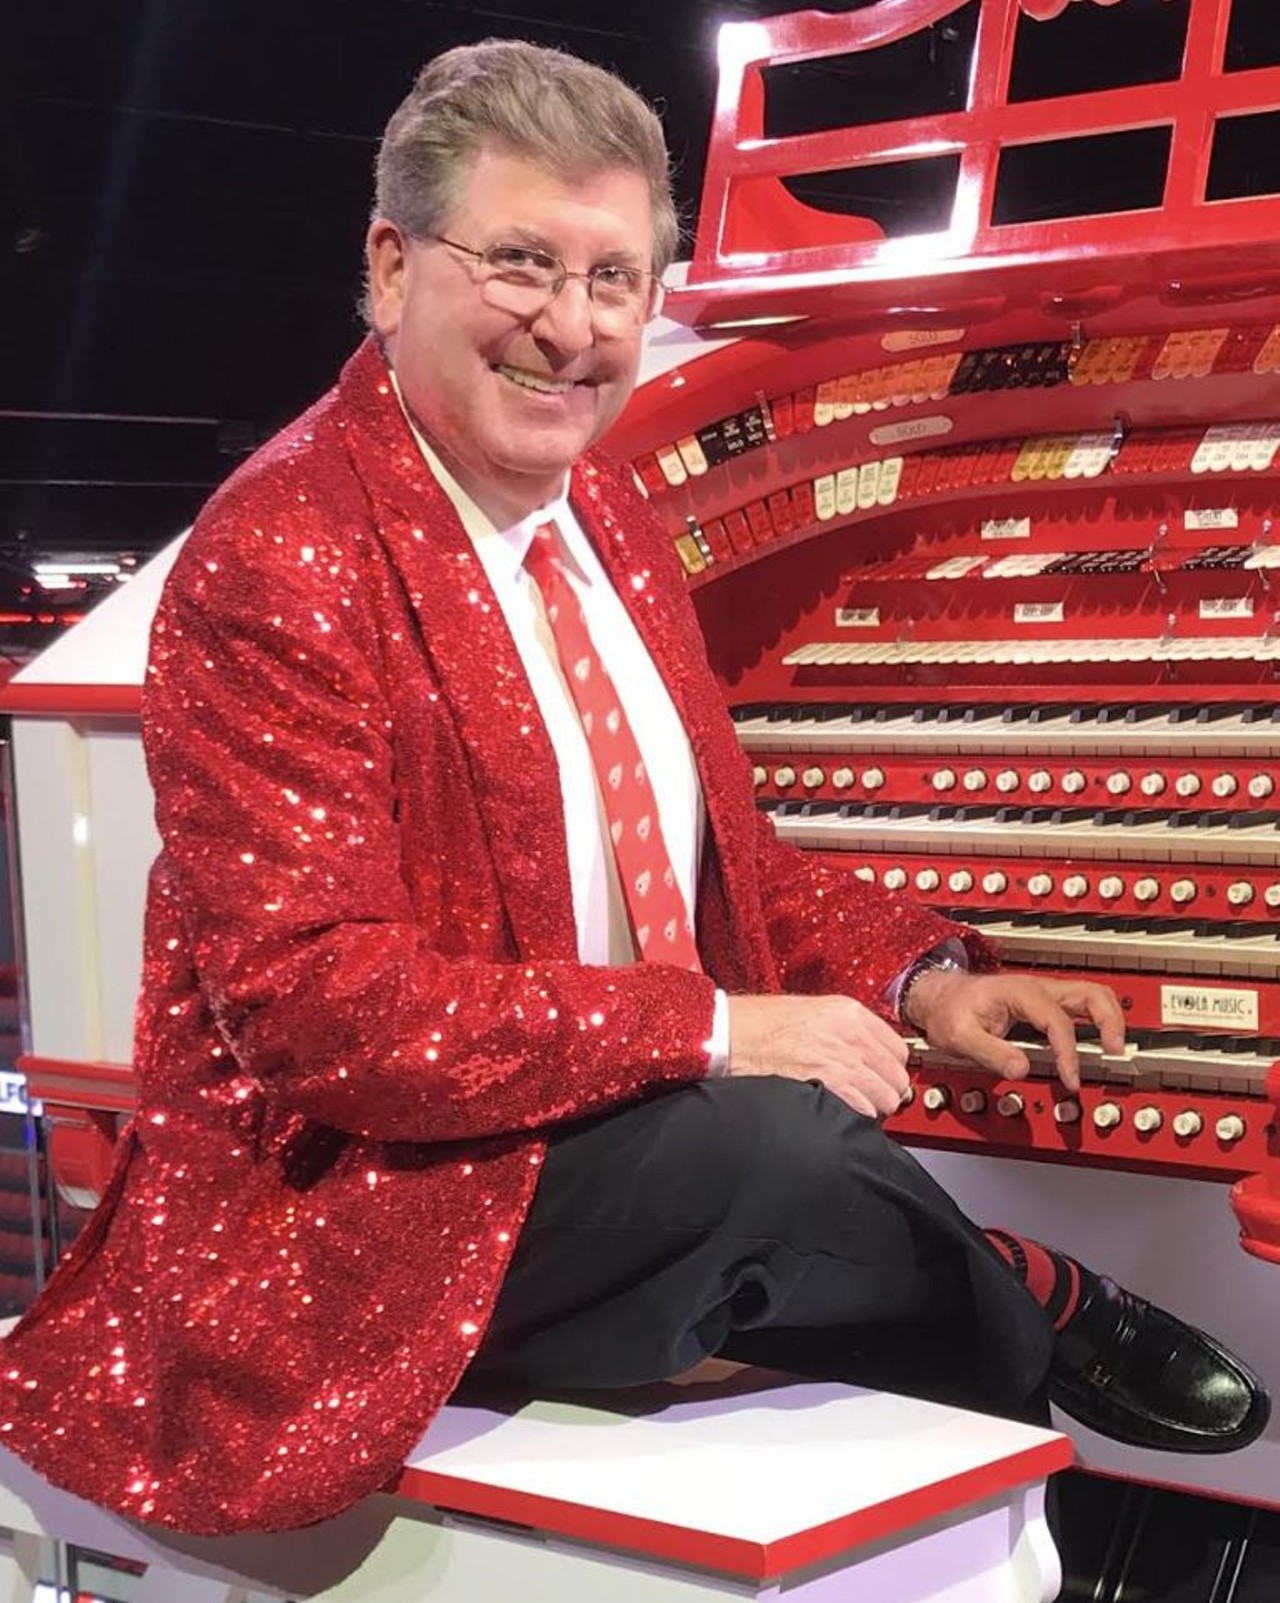  Lance Luce | Sparkling Detroit Red Wings organist
Photo via Lance Luce  